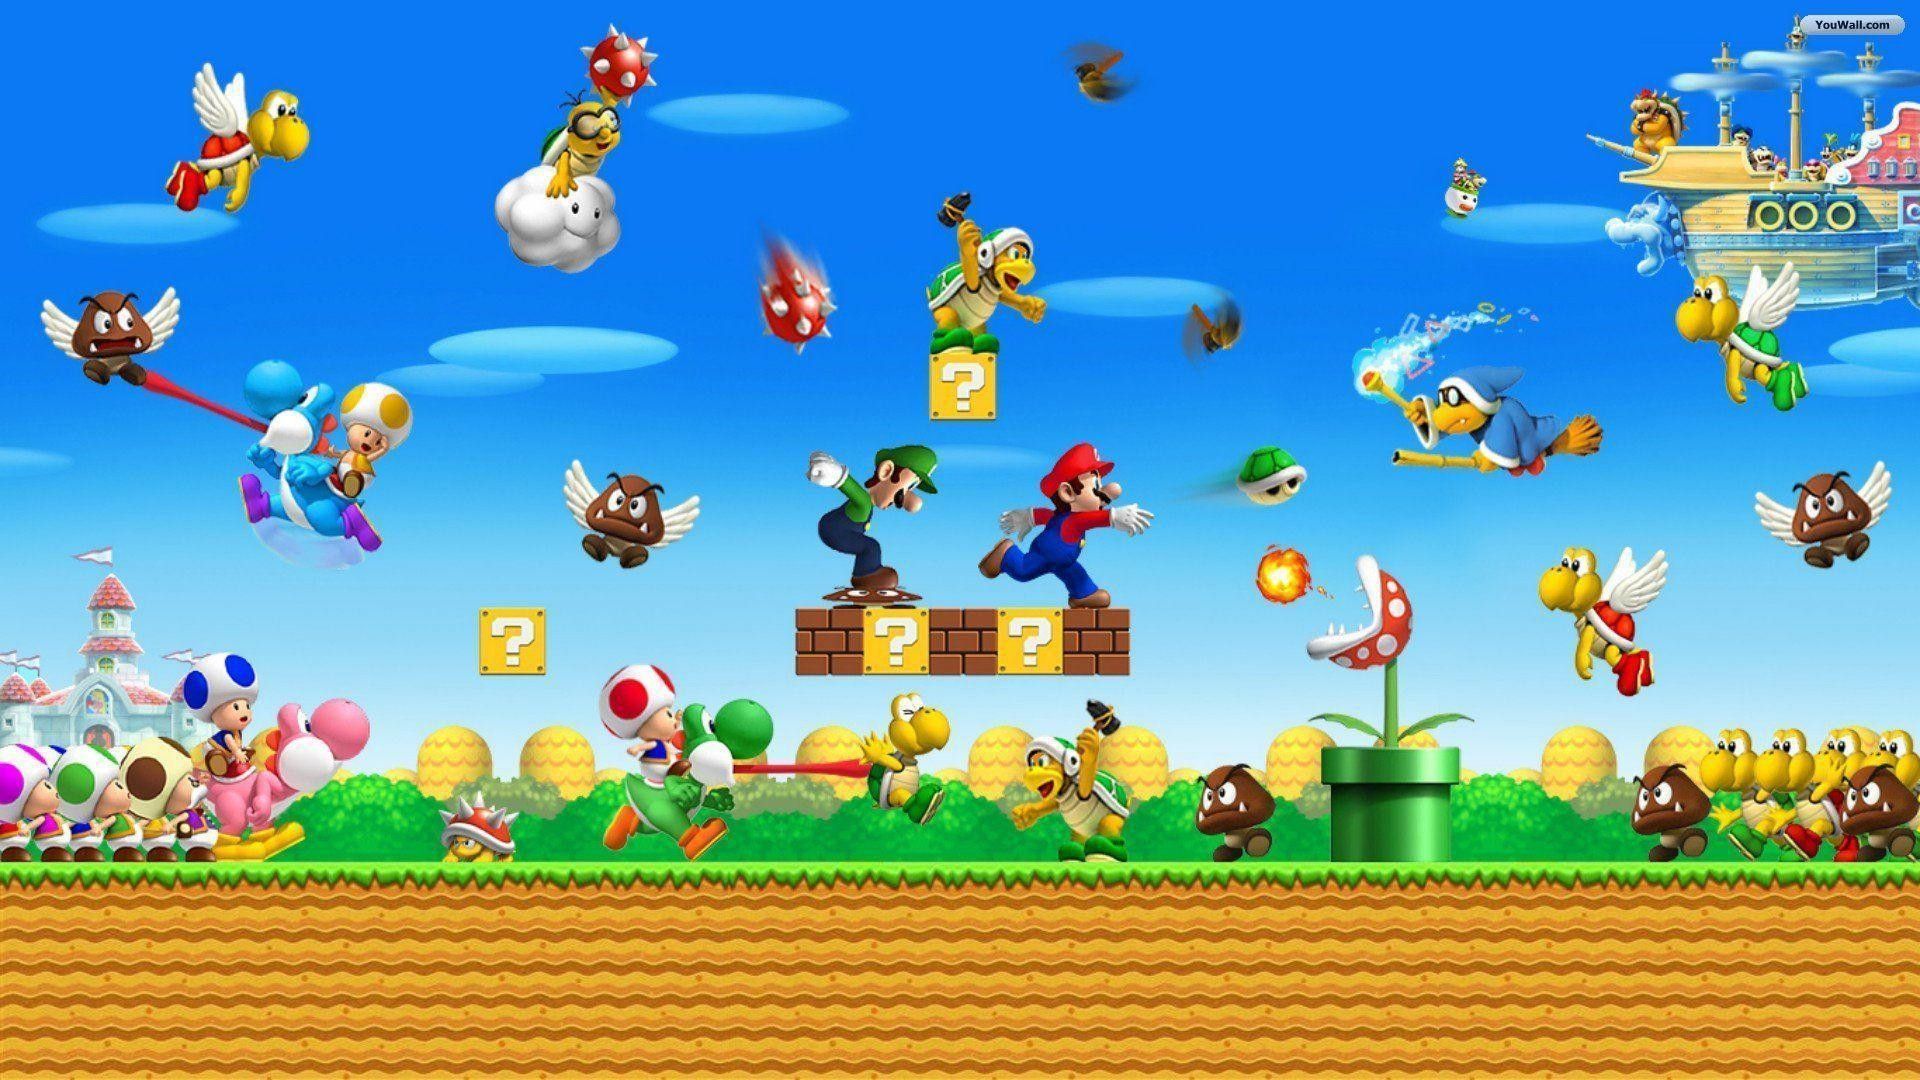 Super Mario Wallpapers